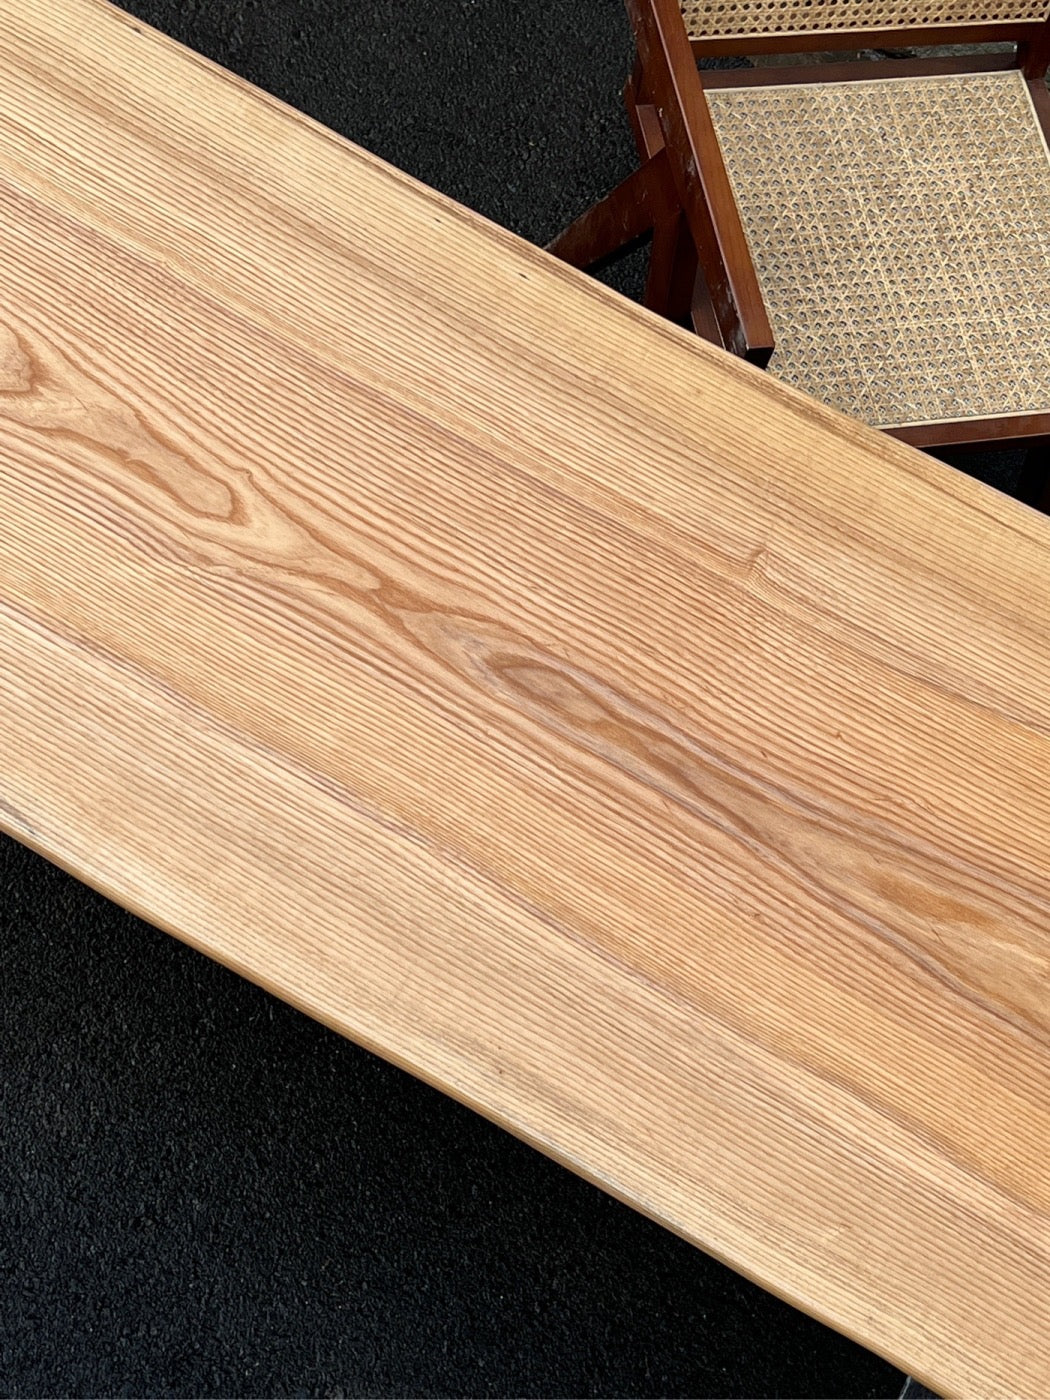 North american wood slab table top, Ash Wood live edge slab table